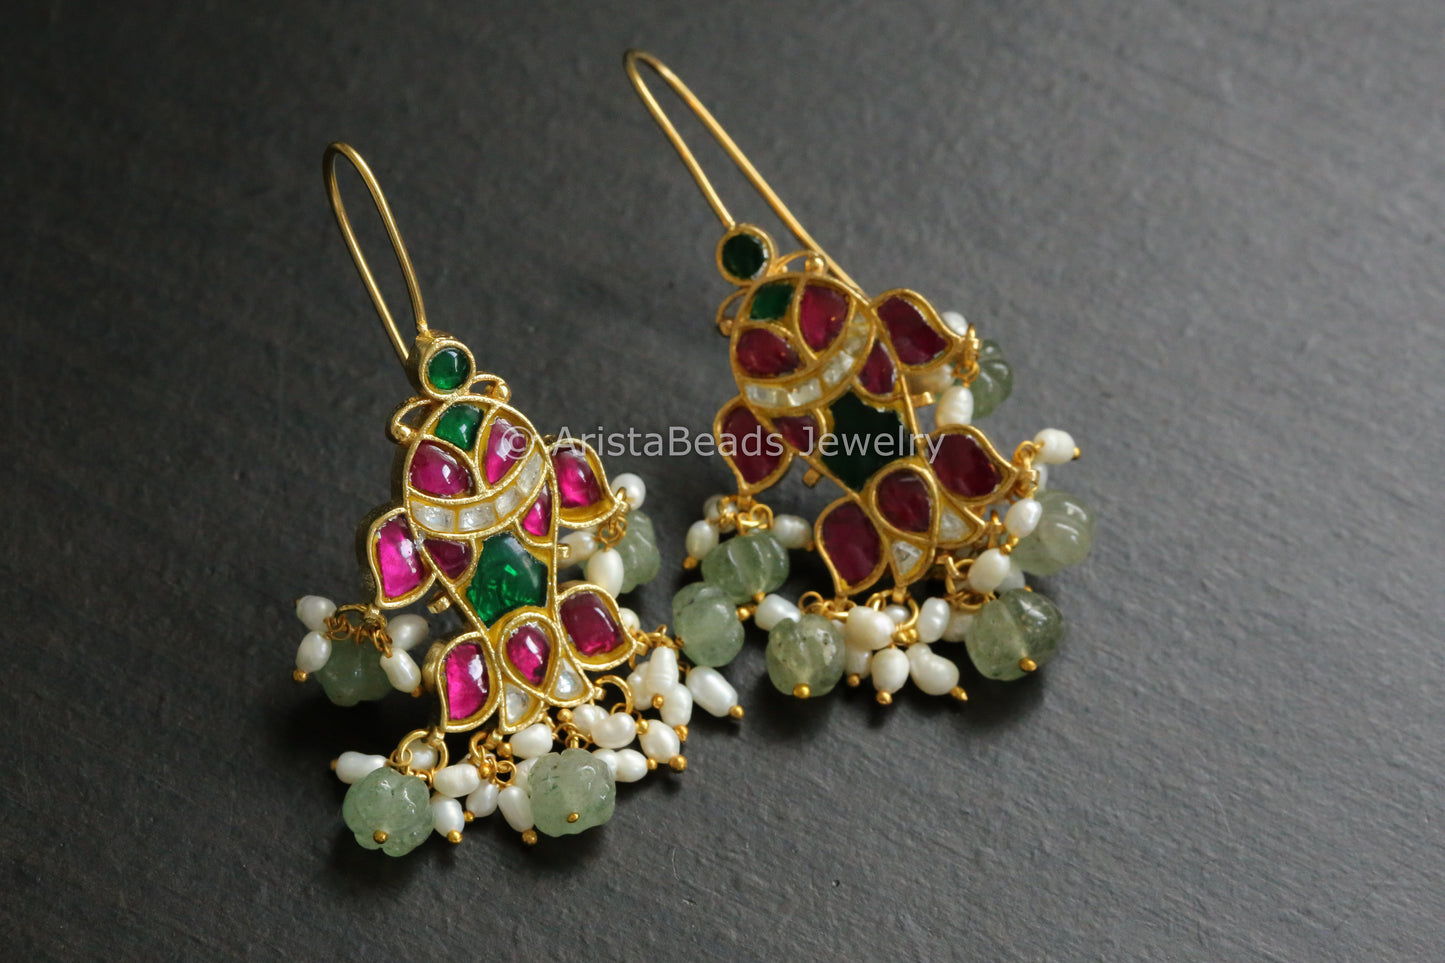 Silver Look Alike Kundan Earrings With Rice Pearls - Green Ruby